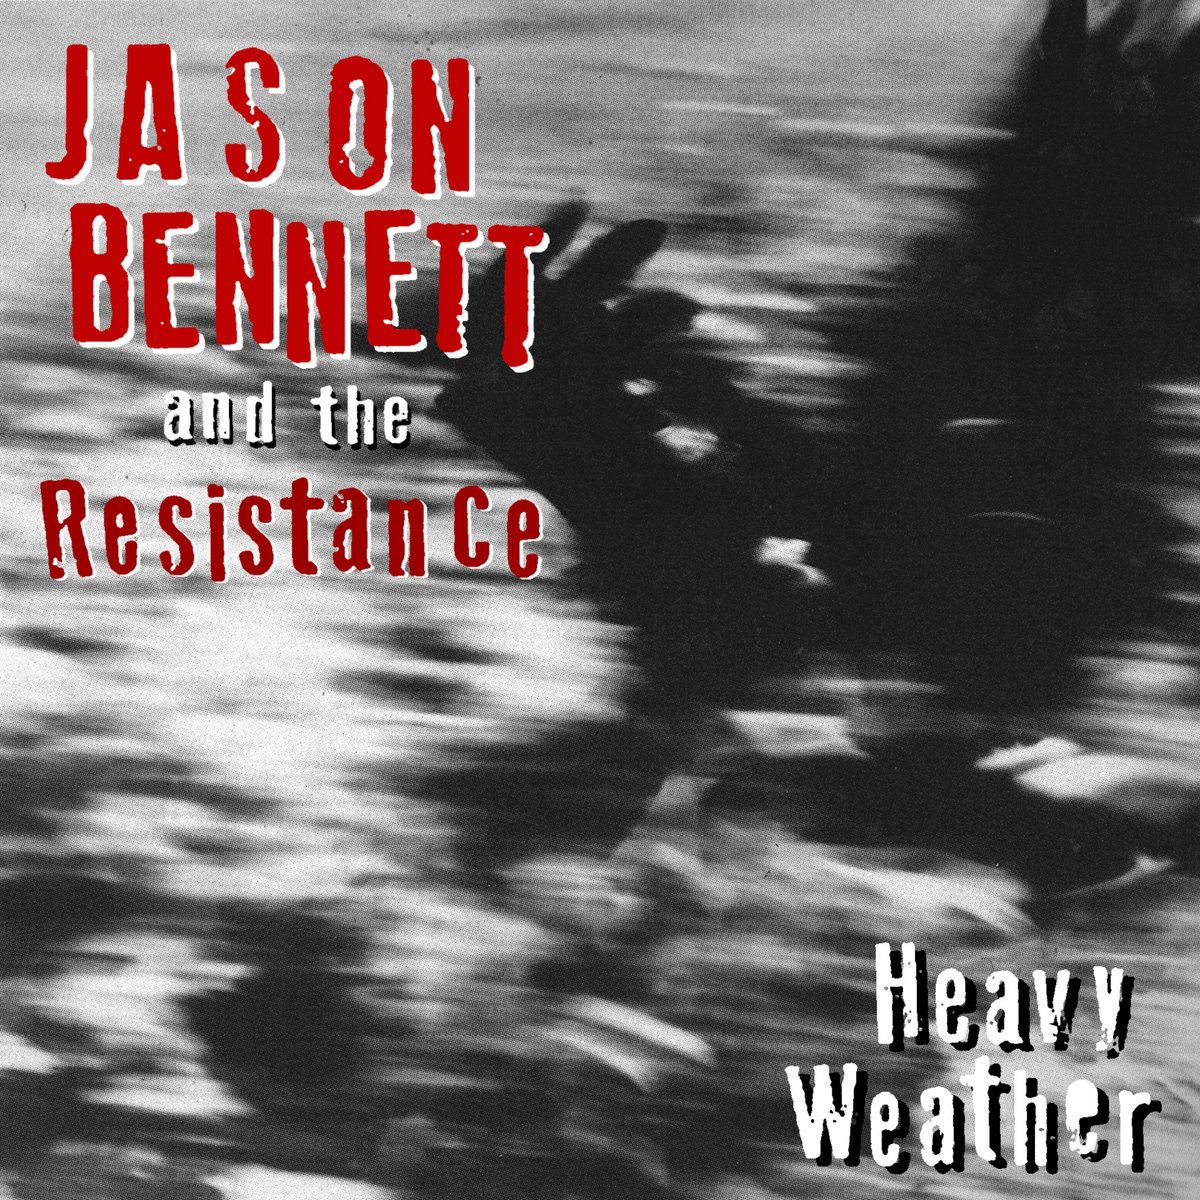 Jason Bennett and The Resistance